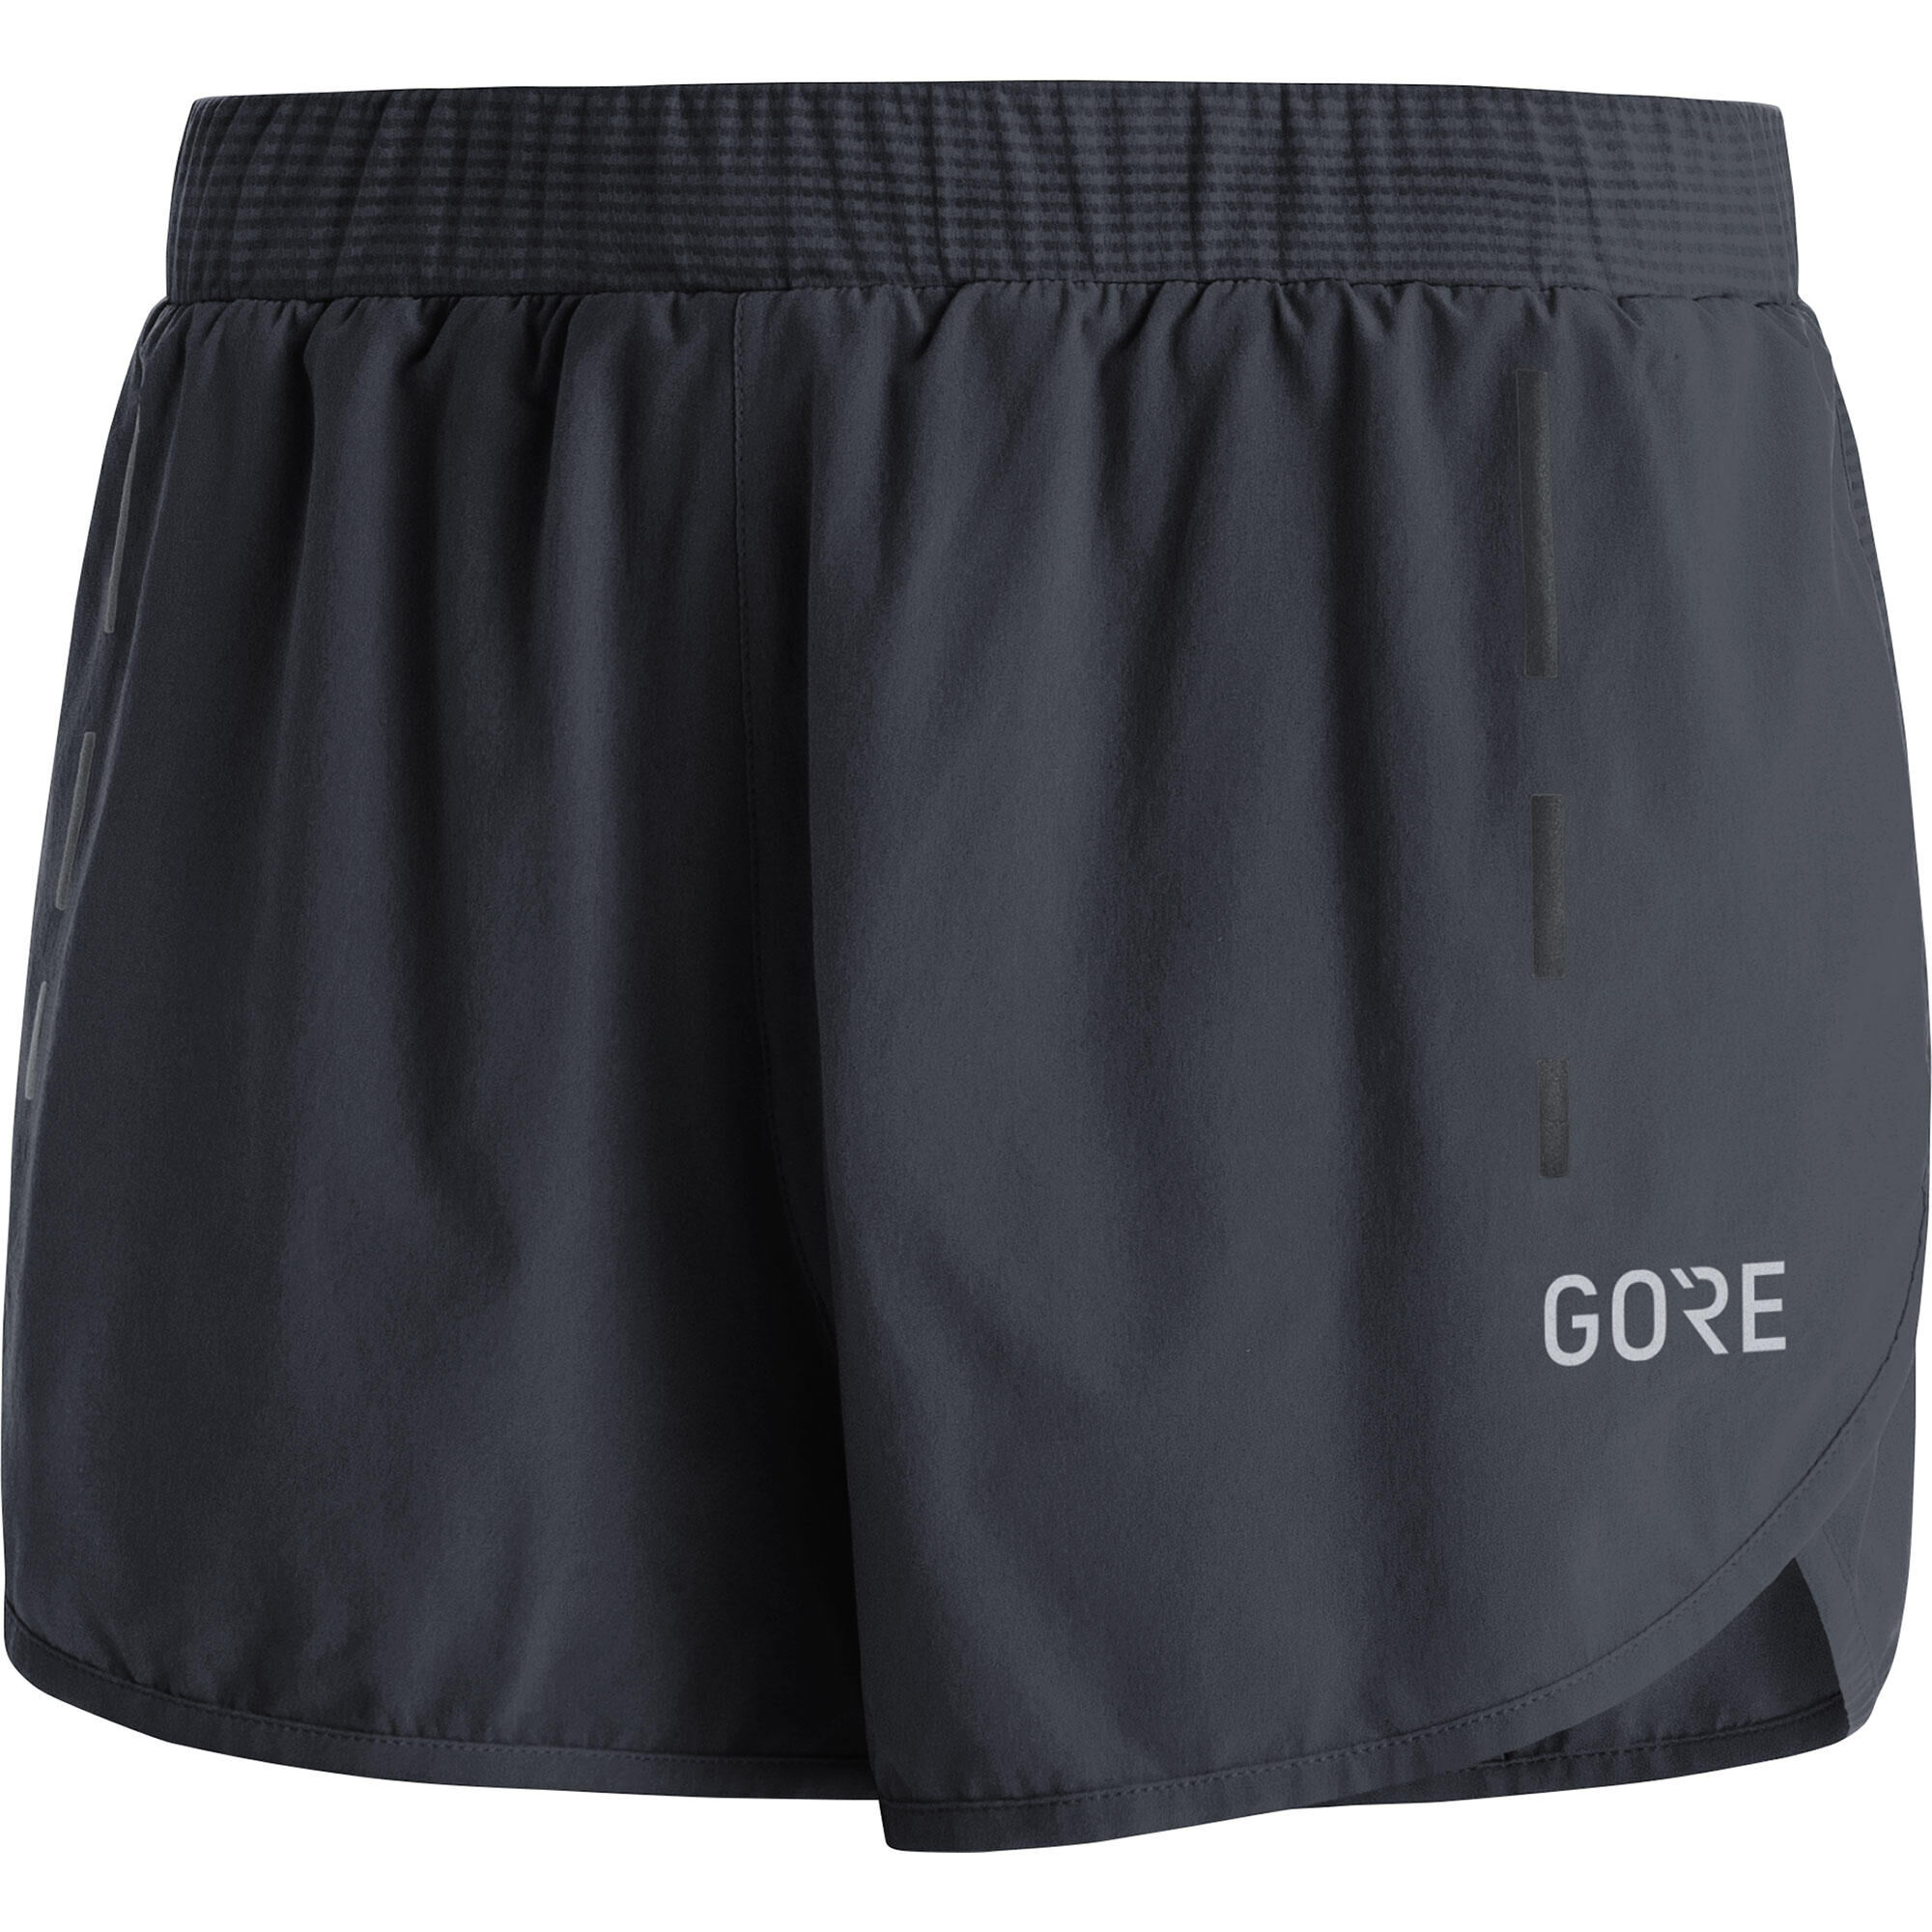 Gore Wear Split Shorts - Running shorts - Men's